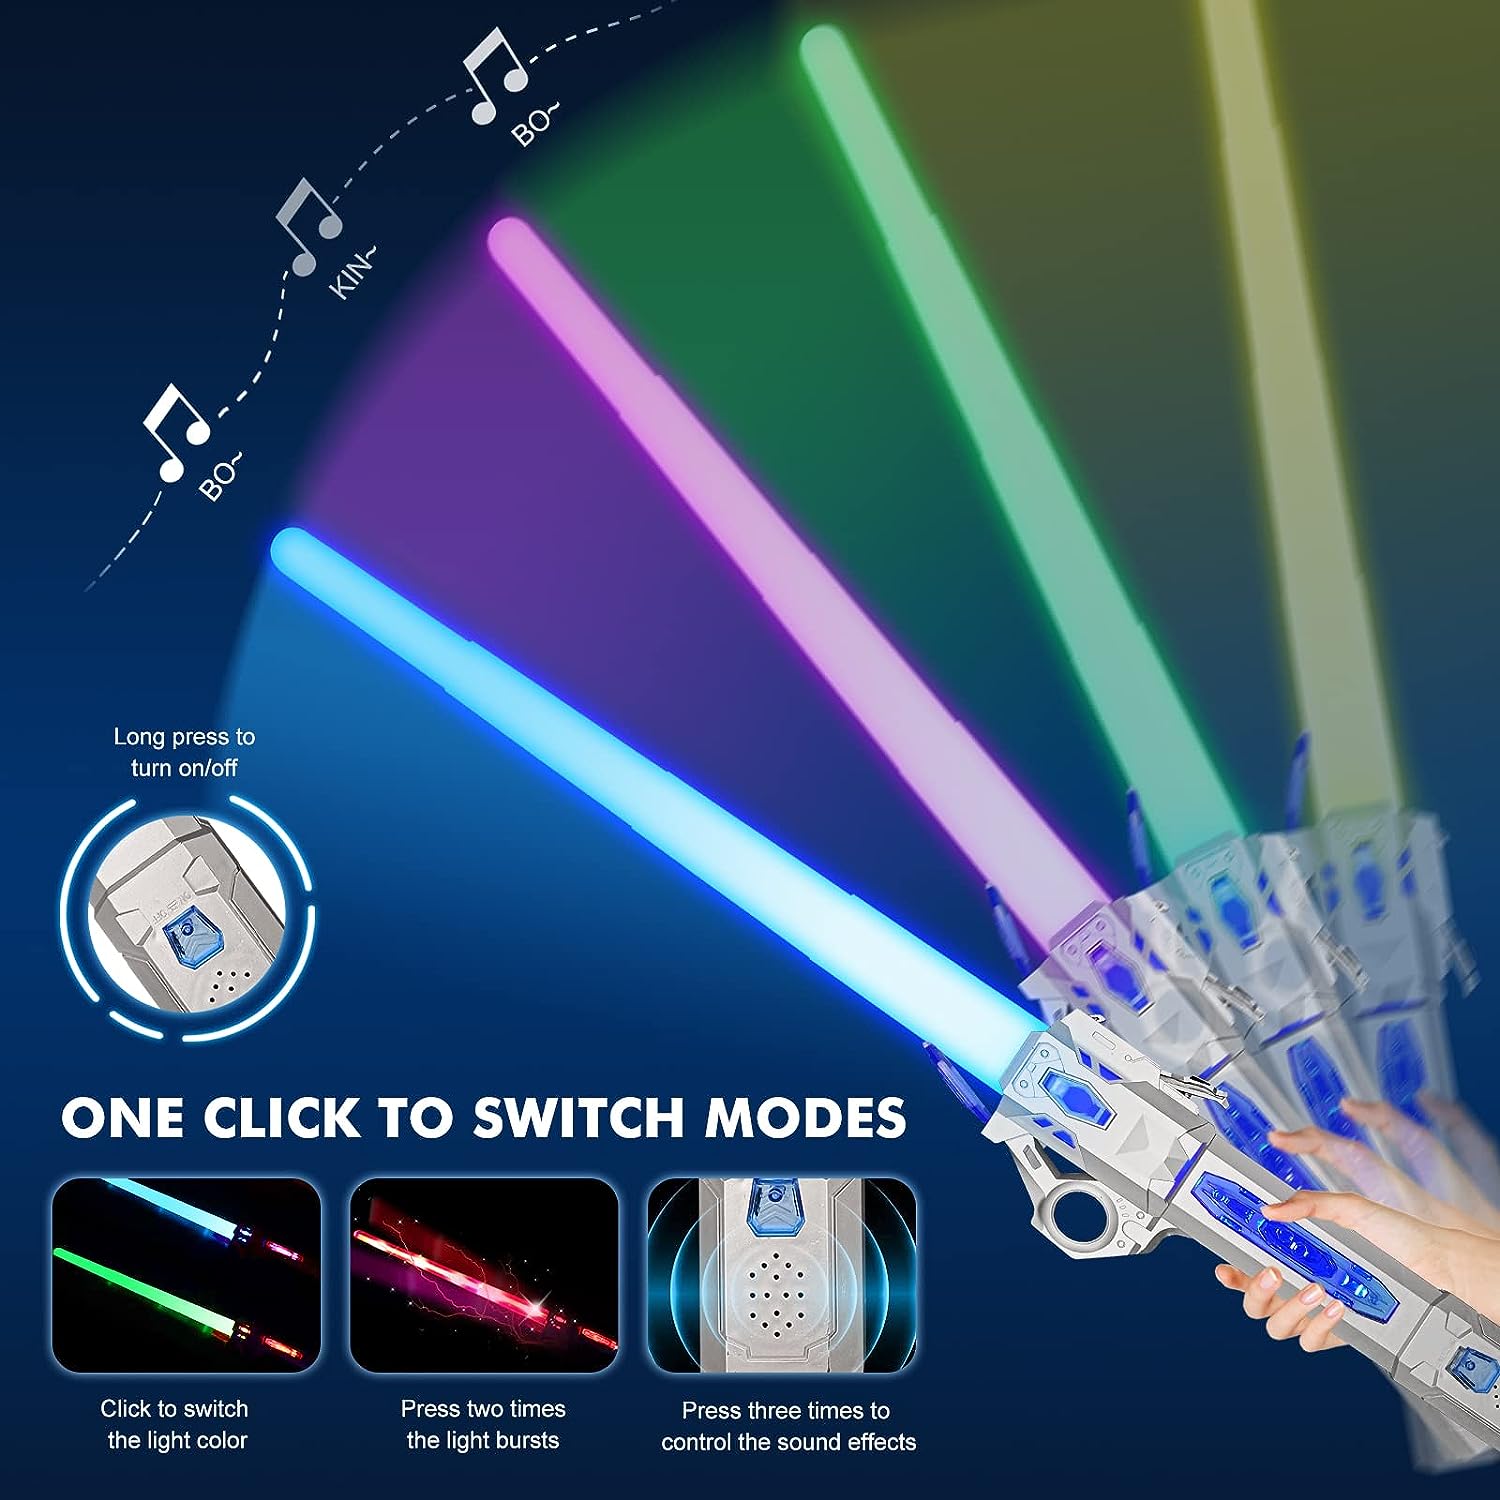 7 Color Star Wars Lightsabers